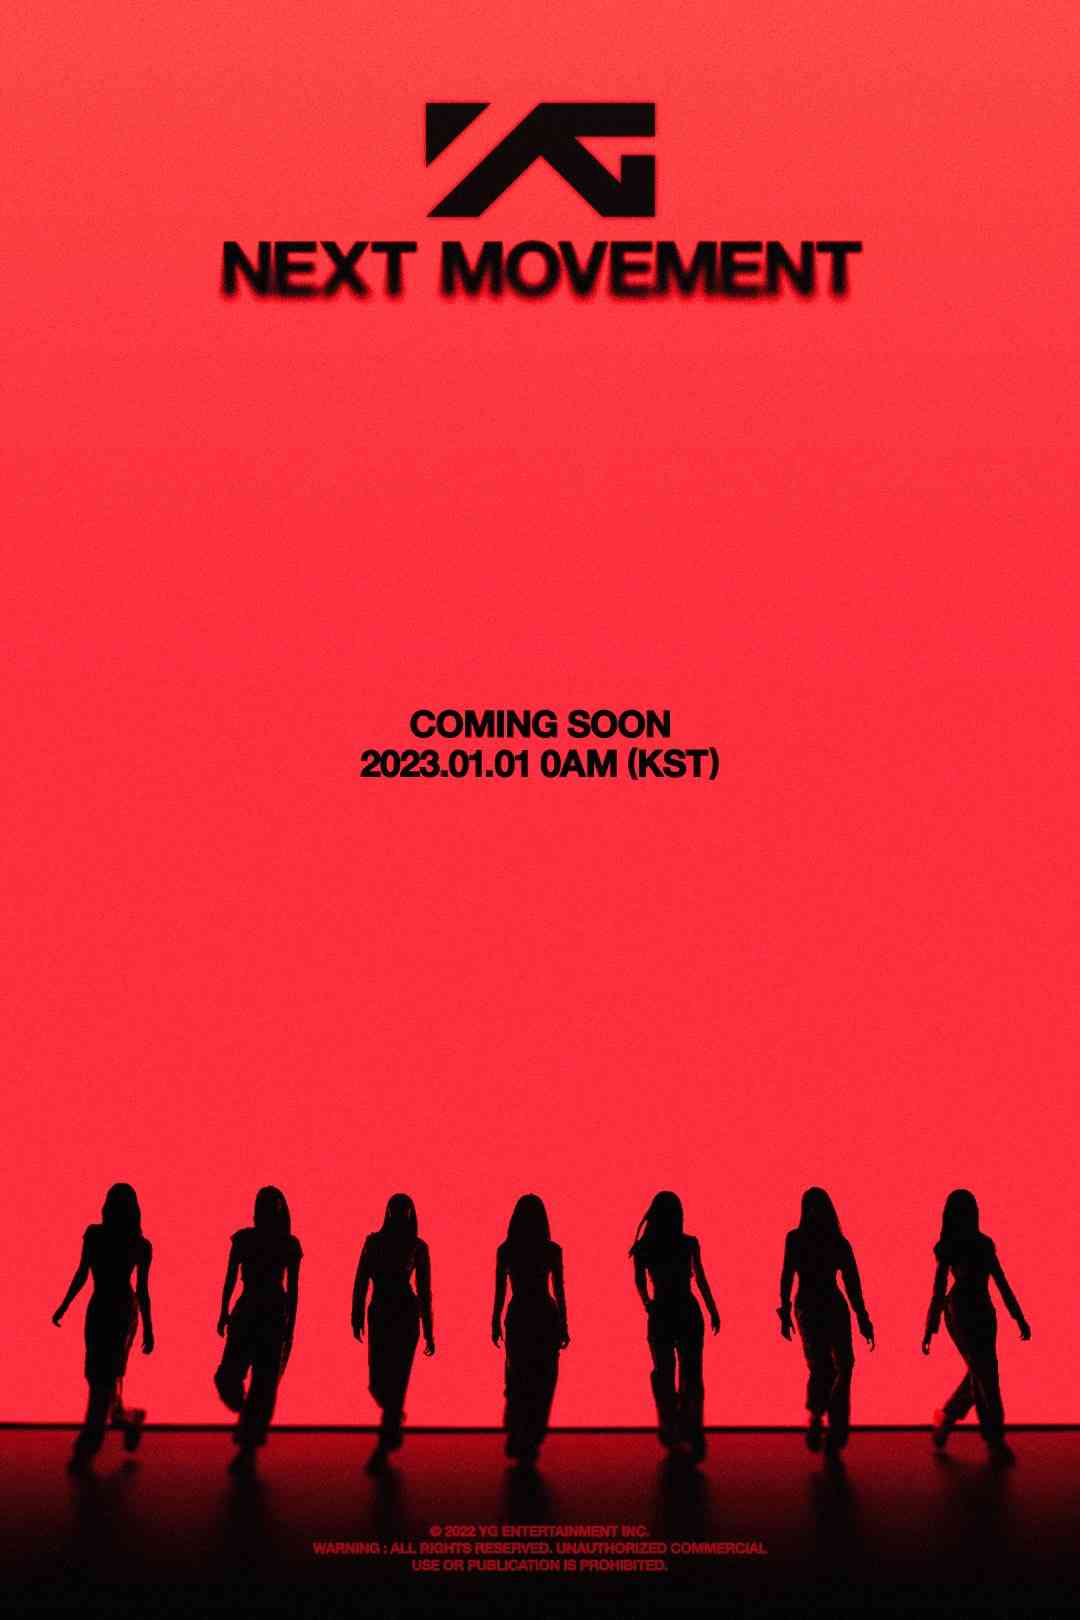 YG Entertainment teases debut of new girl group